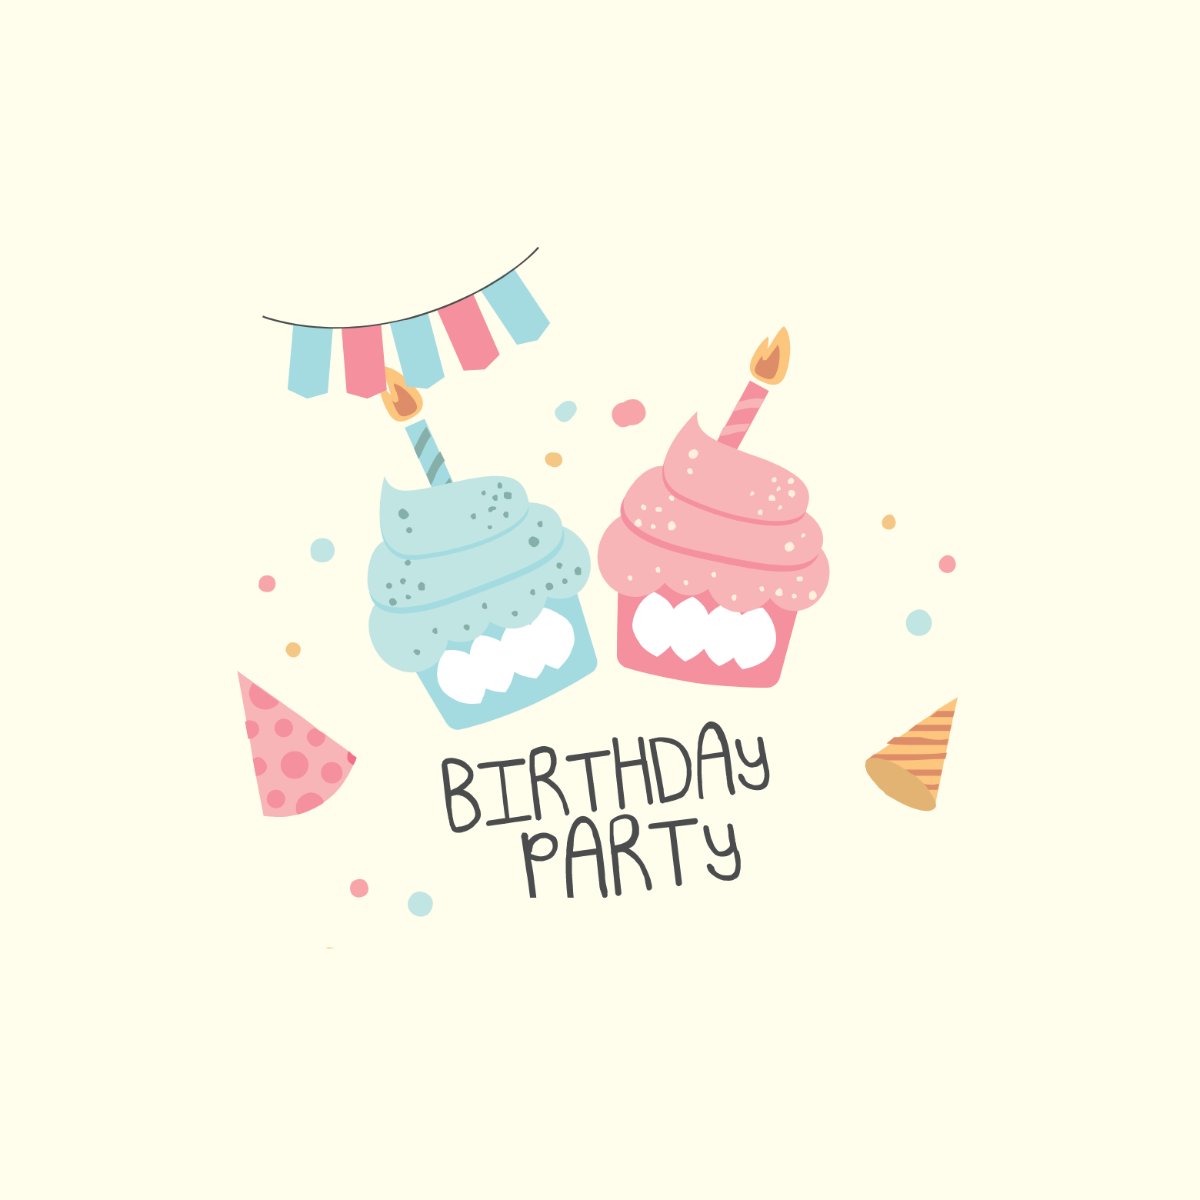 Happy Birthday Party Vector Template